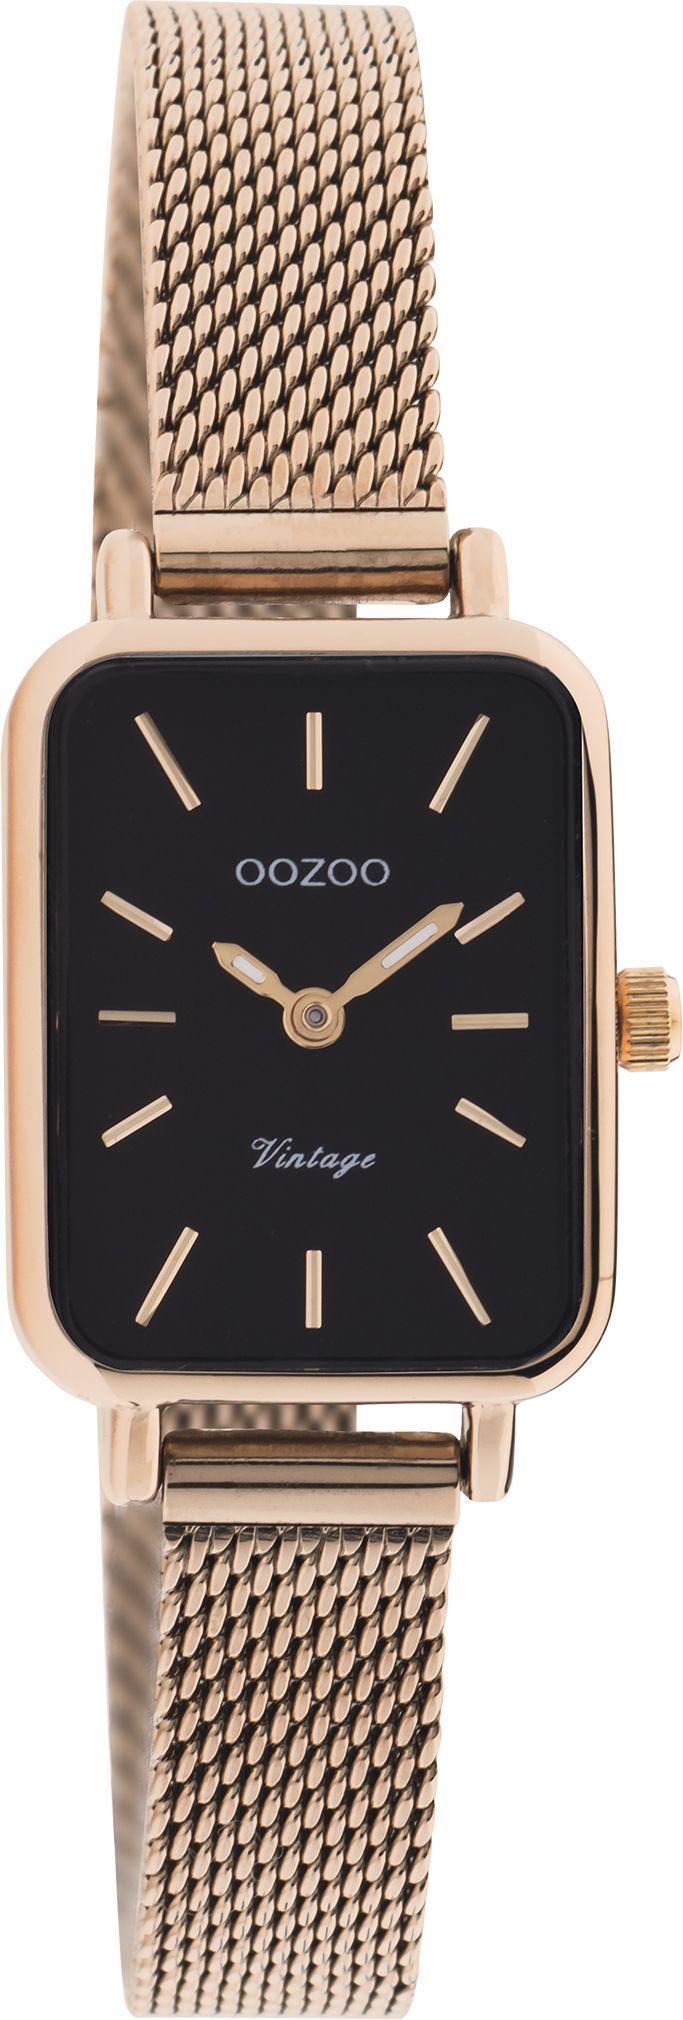 OOZOO Vintage C20270 σε χρώμα ροζ χρυσό